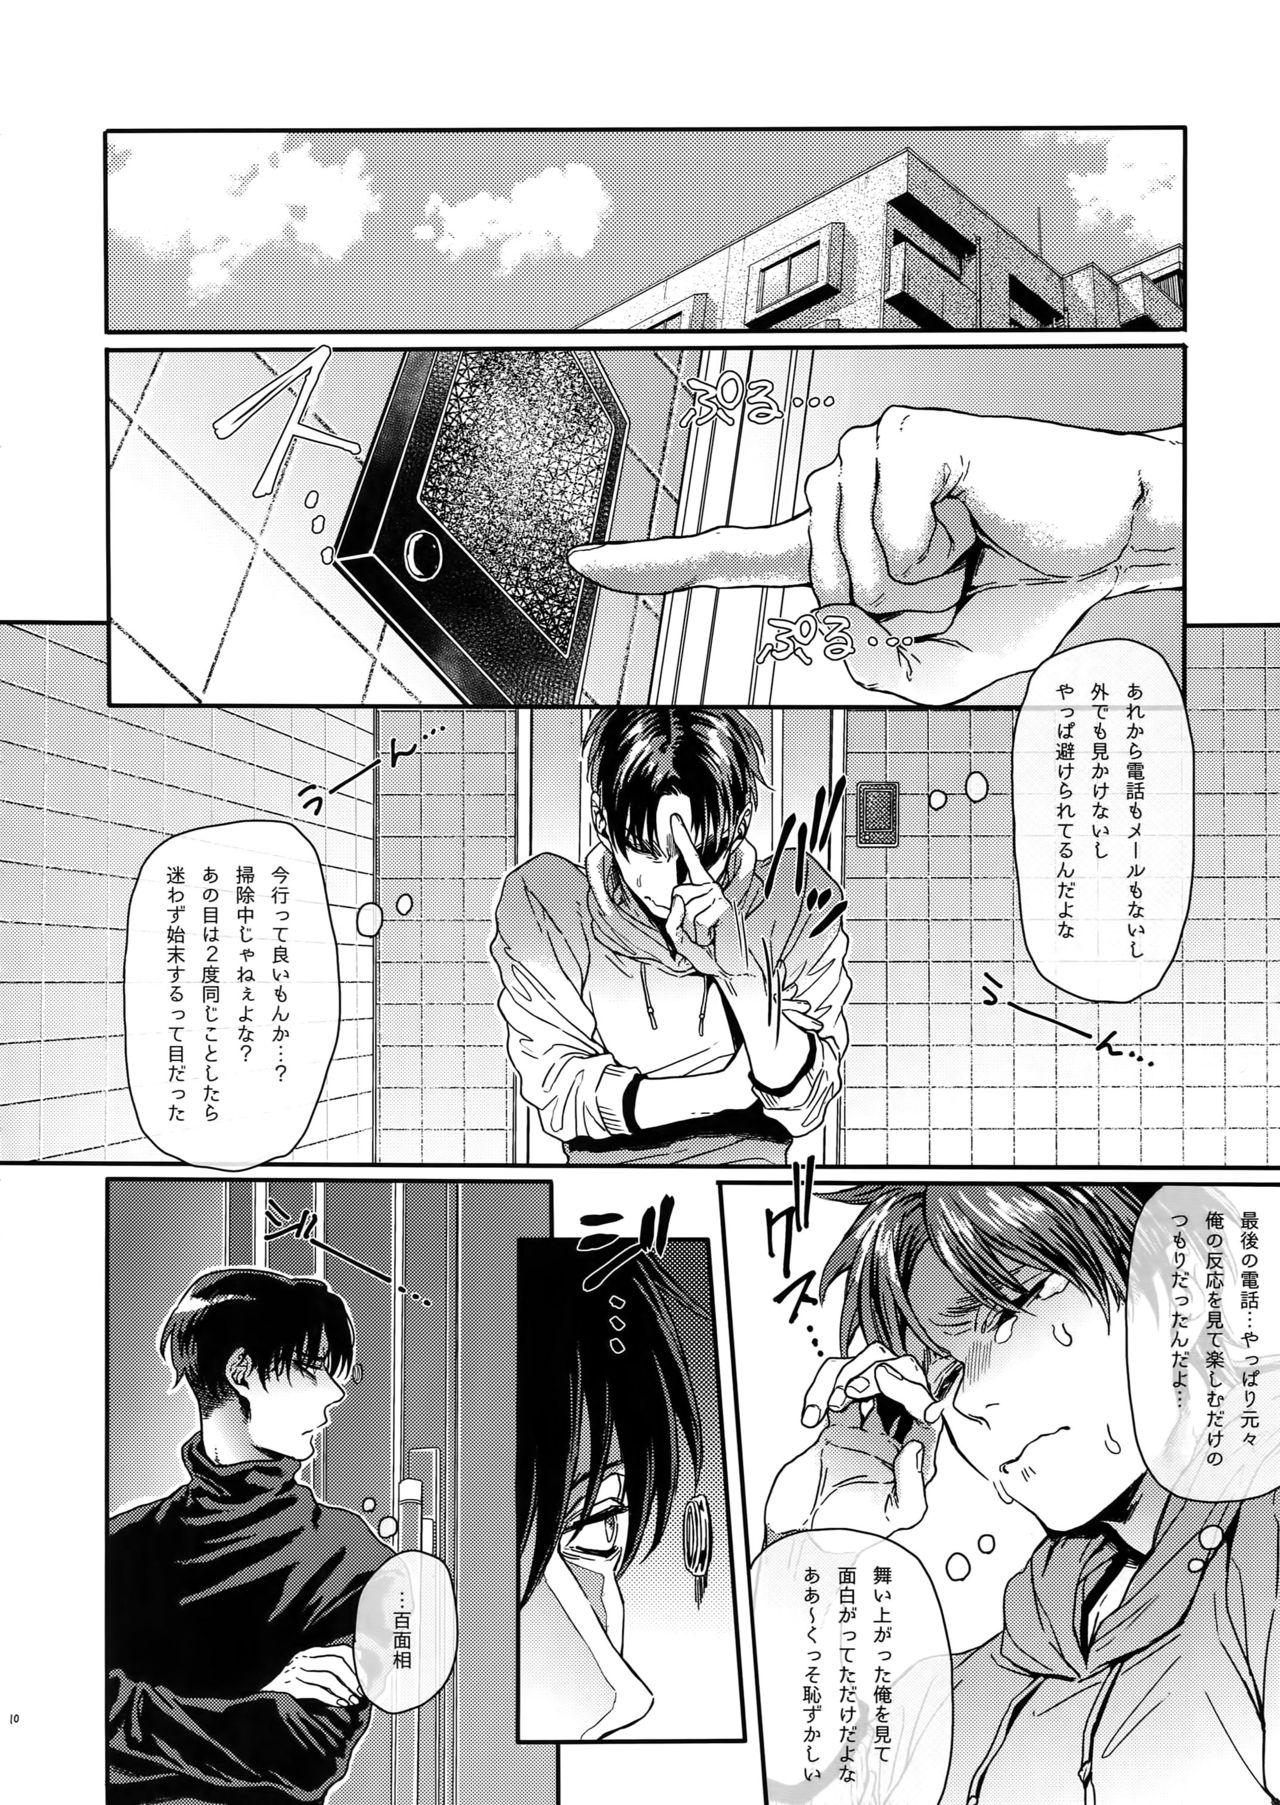 Public PROJECT STALKING 2 - Shingeki no kyojin Flogging - Page 9